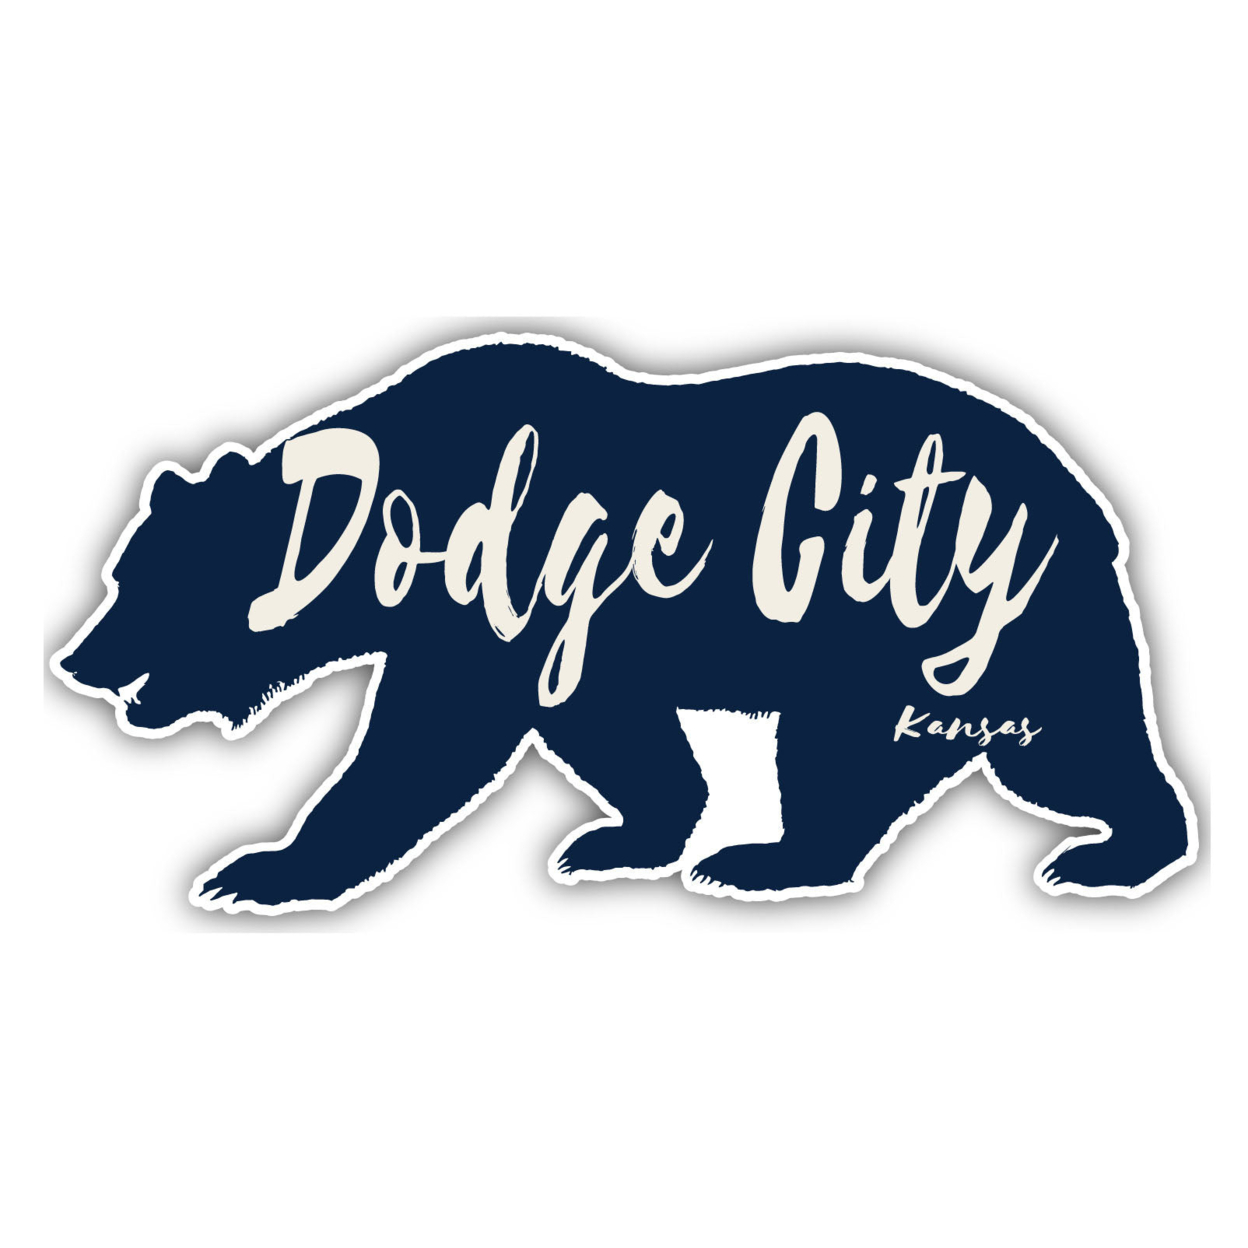 Dodge City Kansas Souvenir Decorative Stickers (Choose Theme And Size) - 4-Pack, 6-Inch, Bear